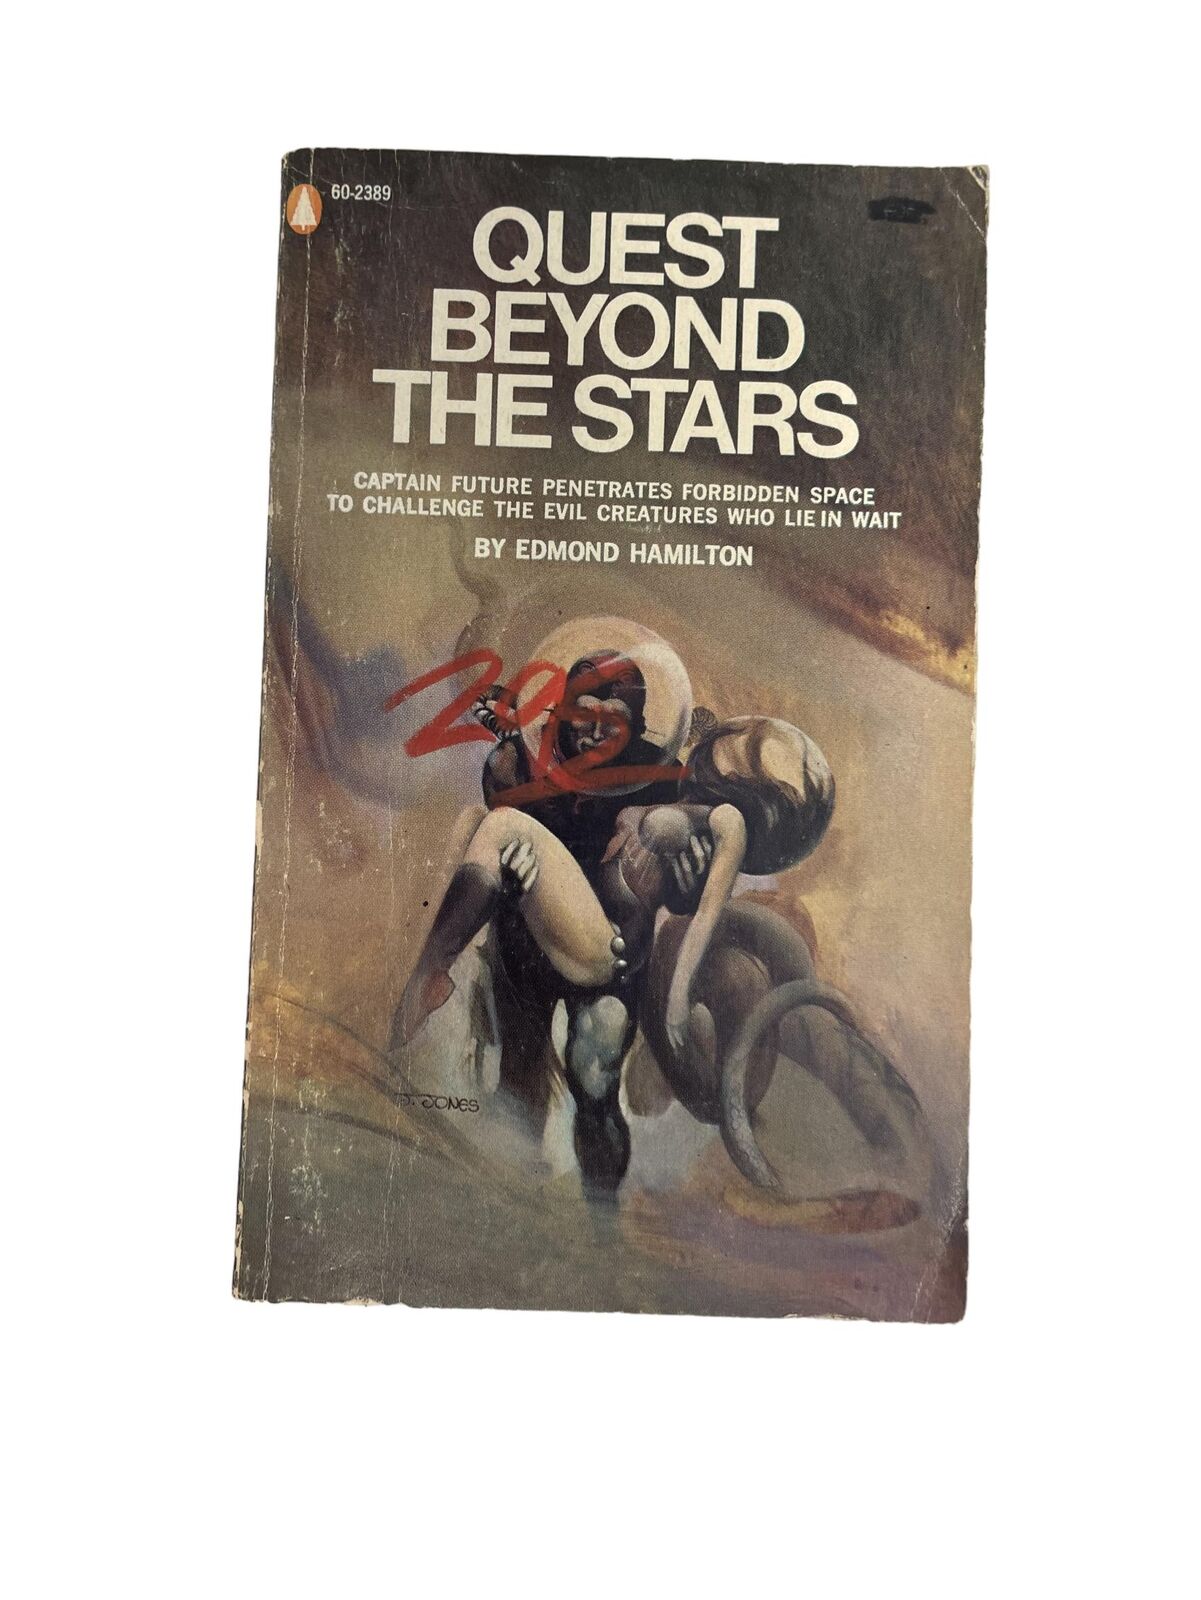 Quest Beyond The Stars by Edmond Hamilton